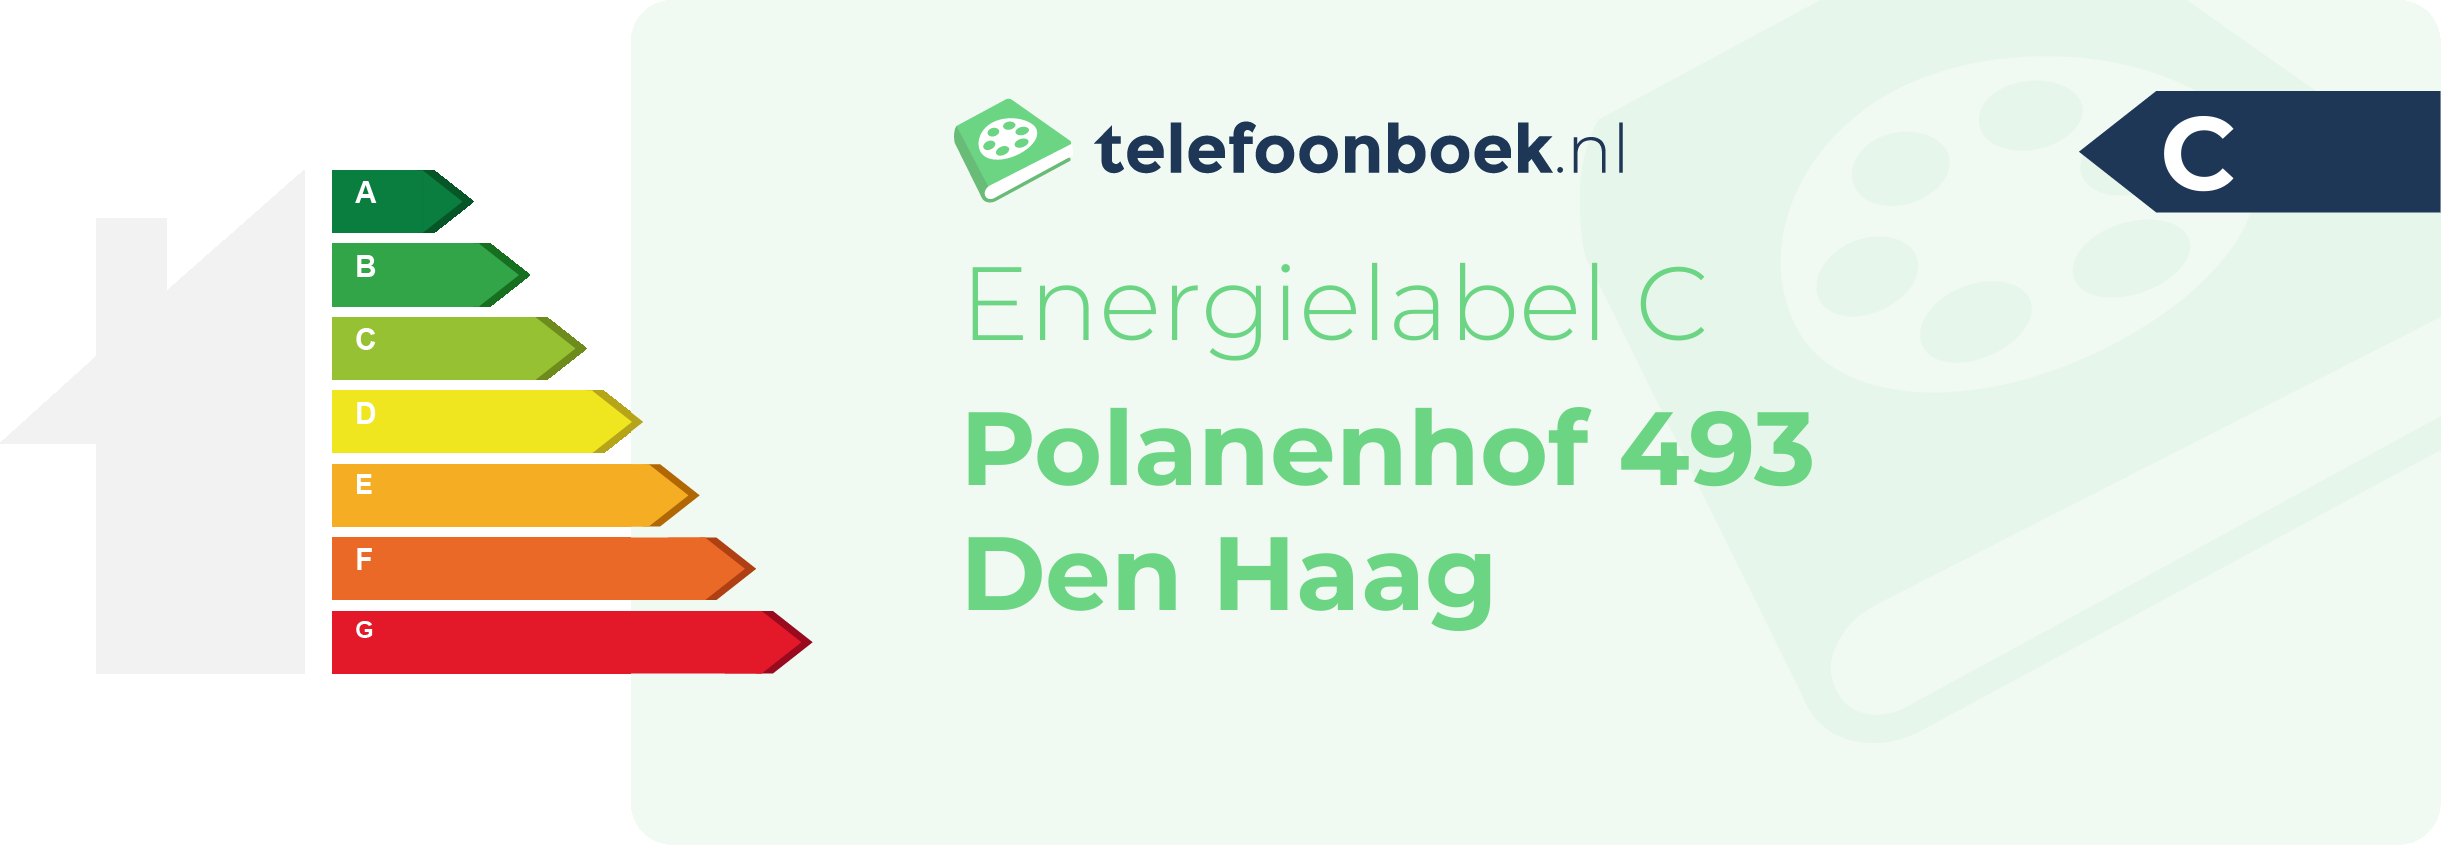 Energielabel Polanenhof 493 Den Haag